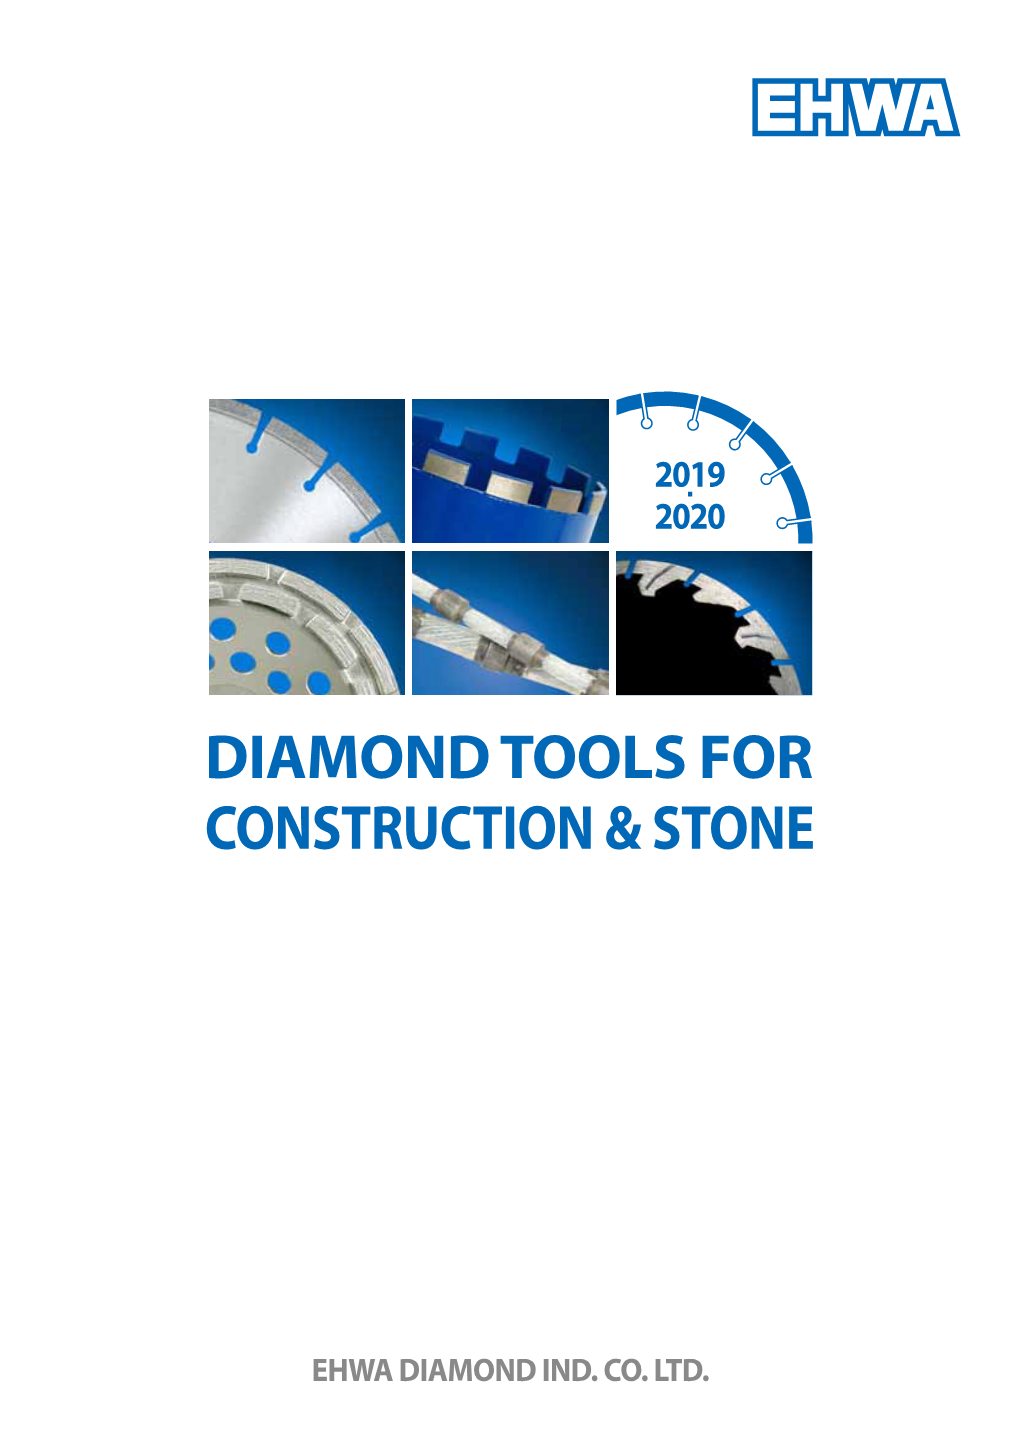 Diamond Tools for Construction & Stone